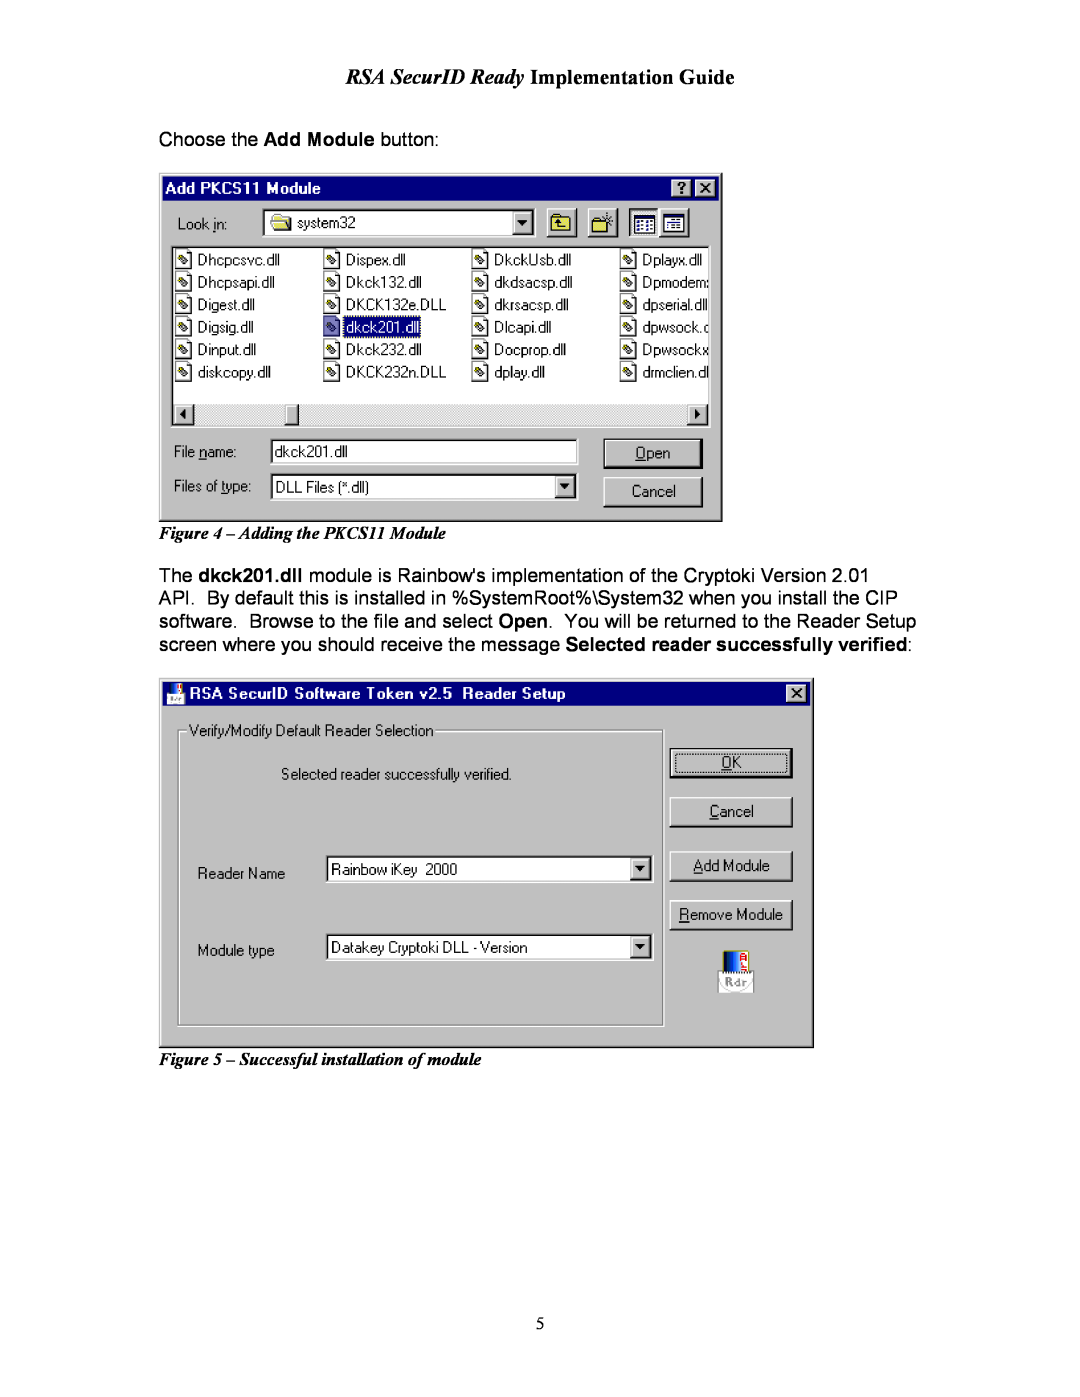 Rainbow Technologies 2000 manual RSA SecurID Ready Implementation Guide, Choose the Add Module button 